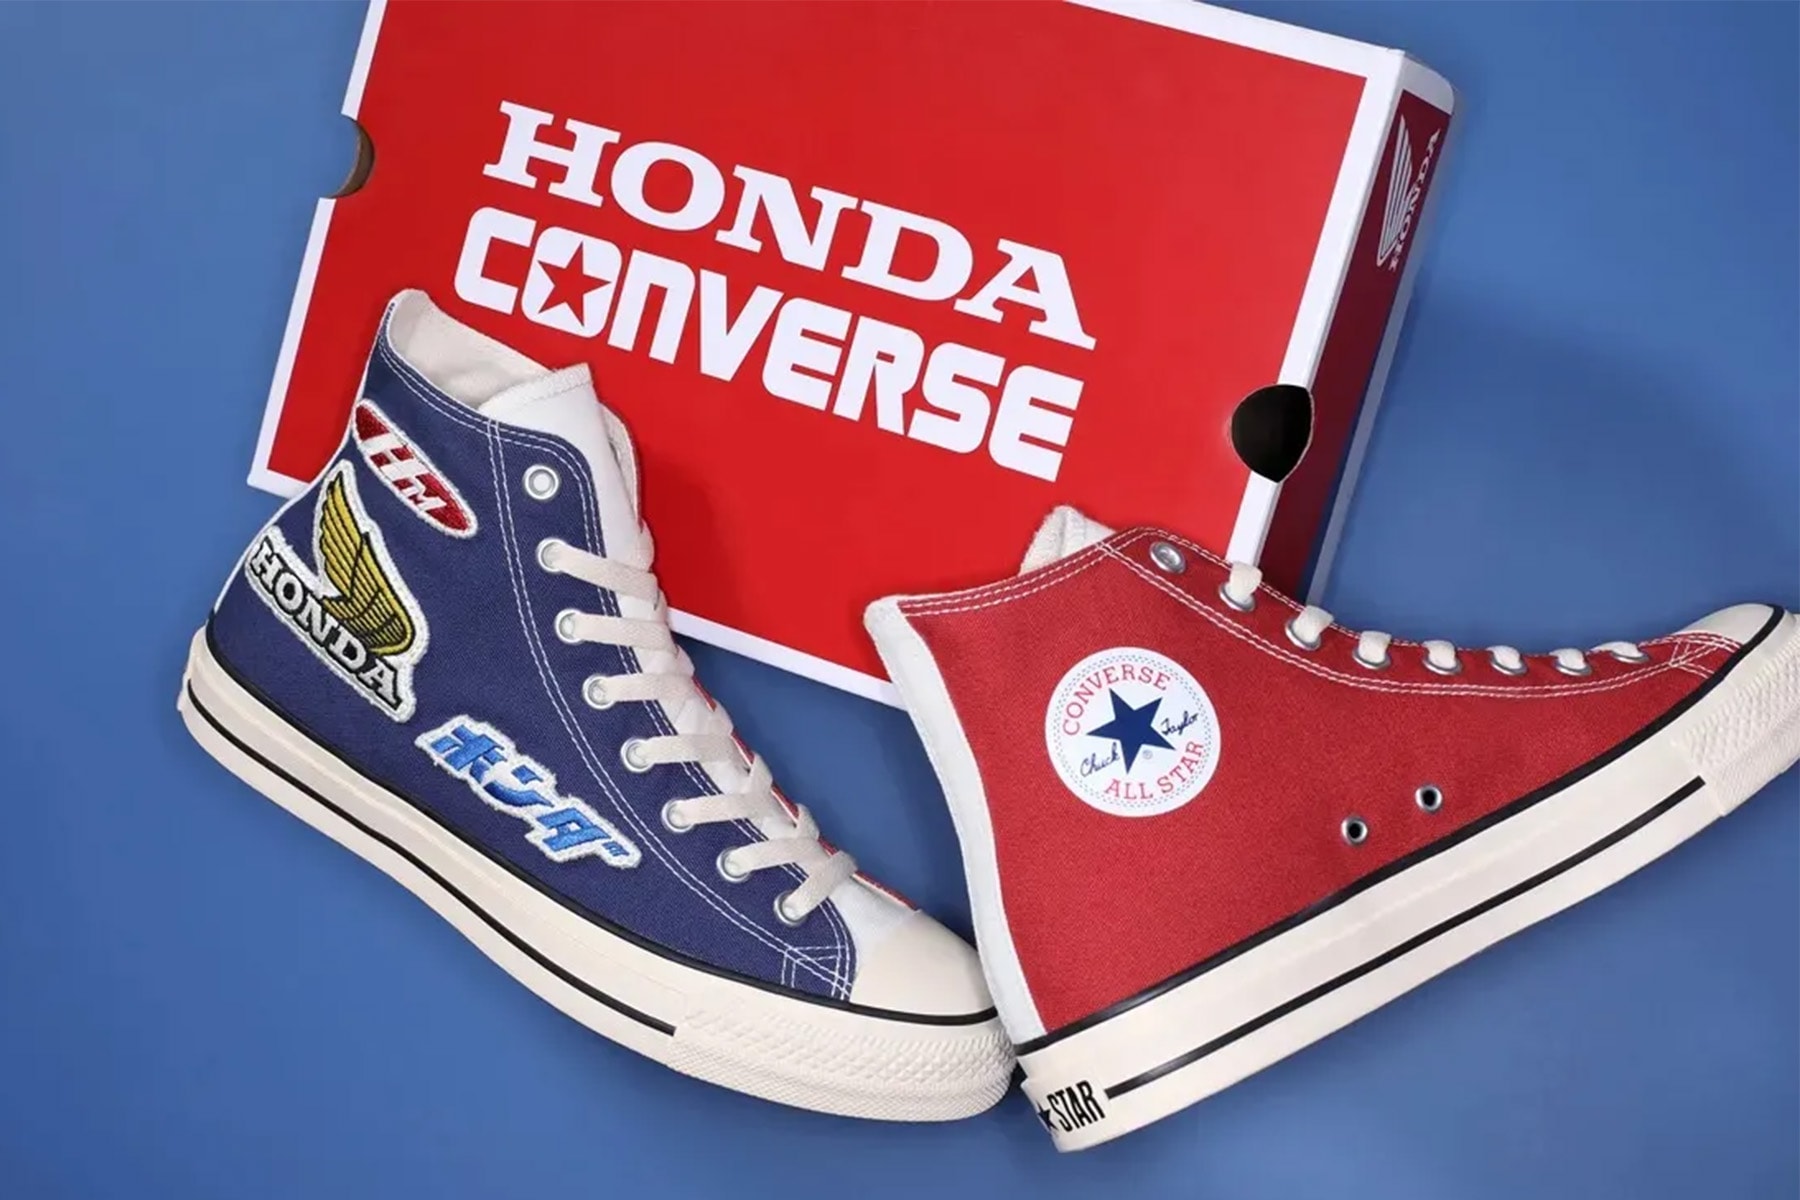 Honda x Converse All Star 全新聯名系列鞋款發佈